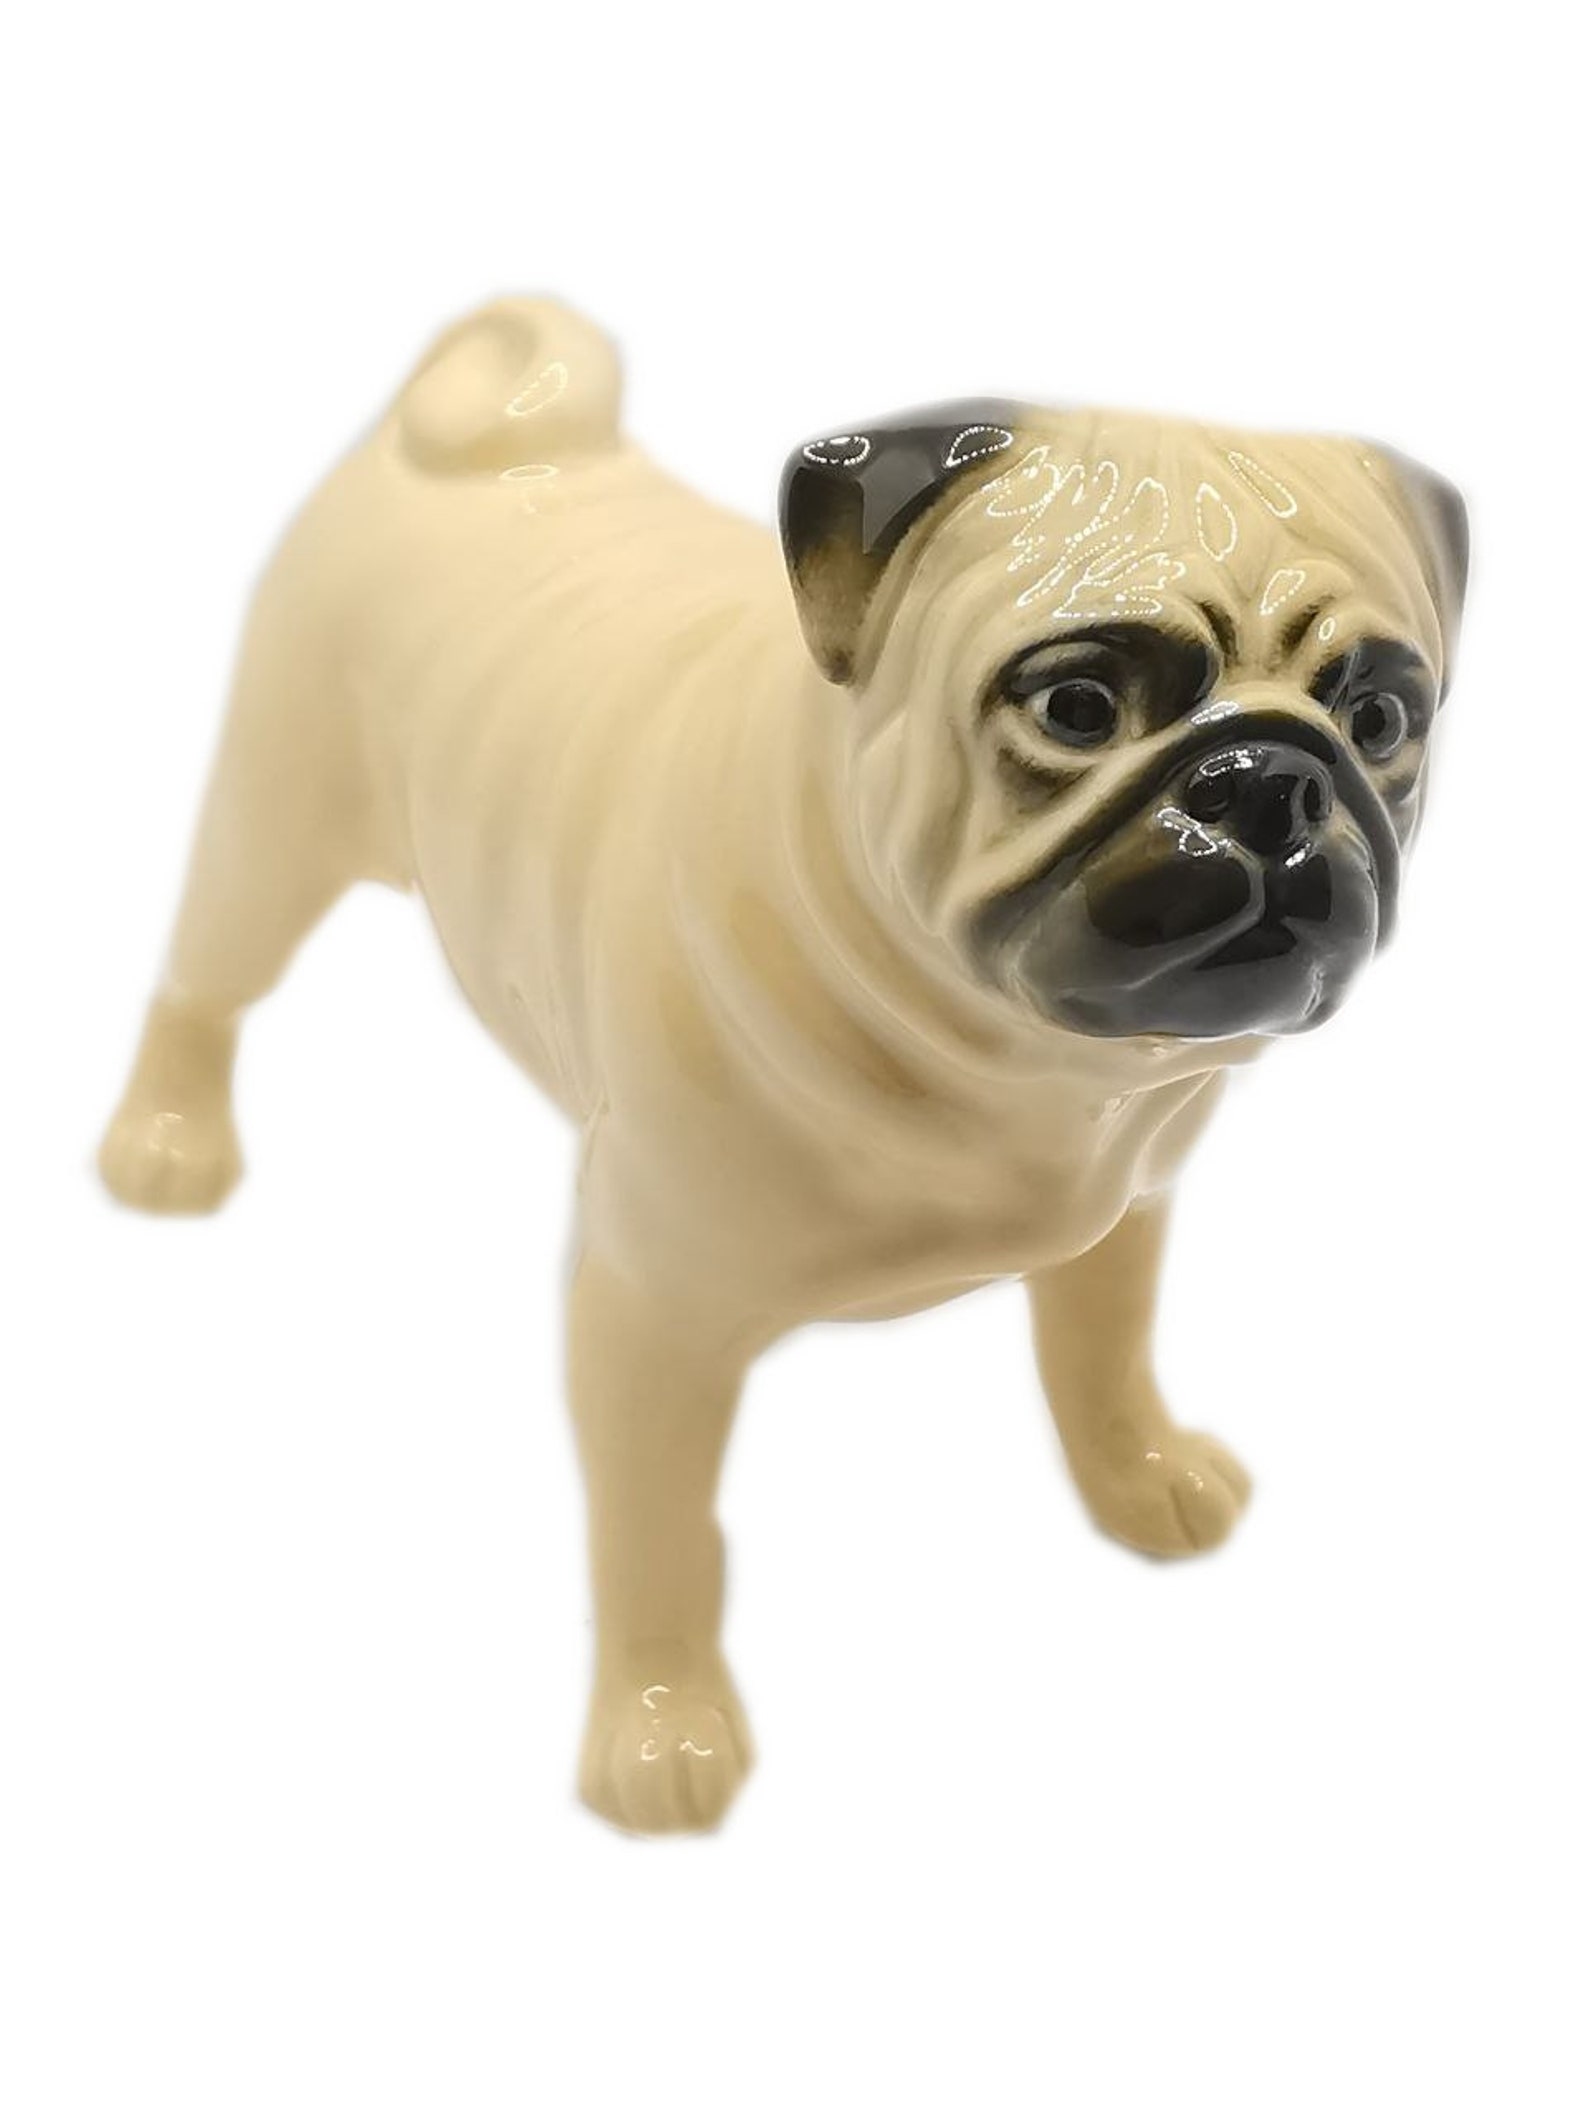 Porcelain pug figurine pug dog collectible home decoration | Etsy